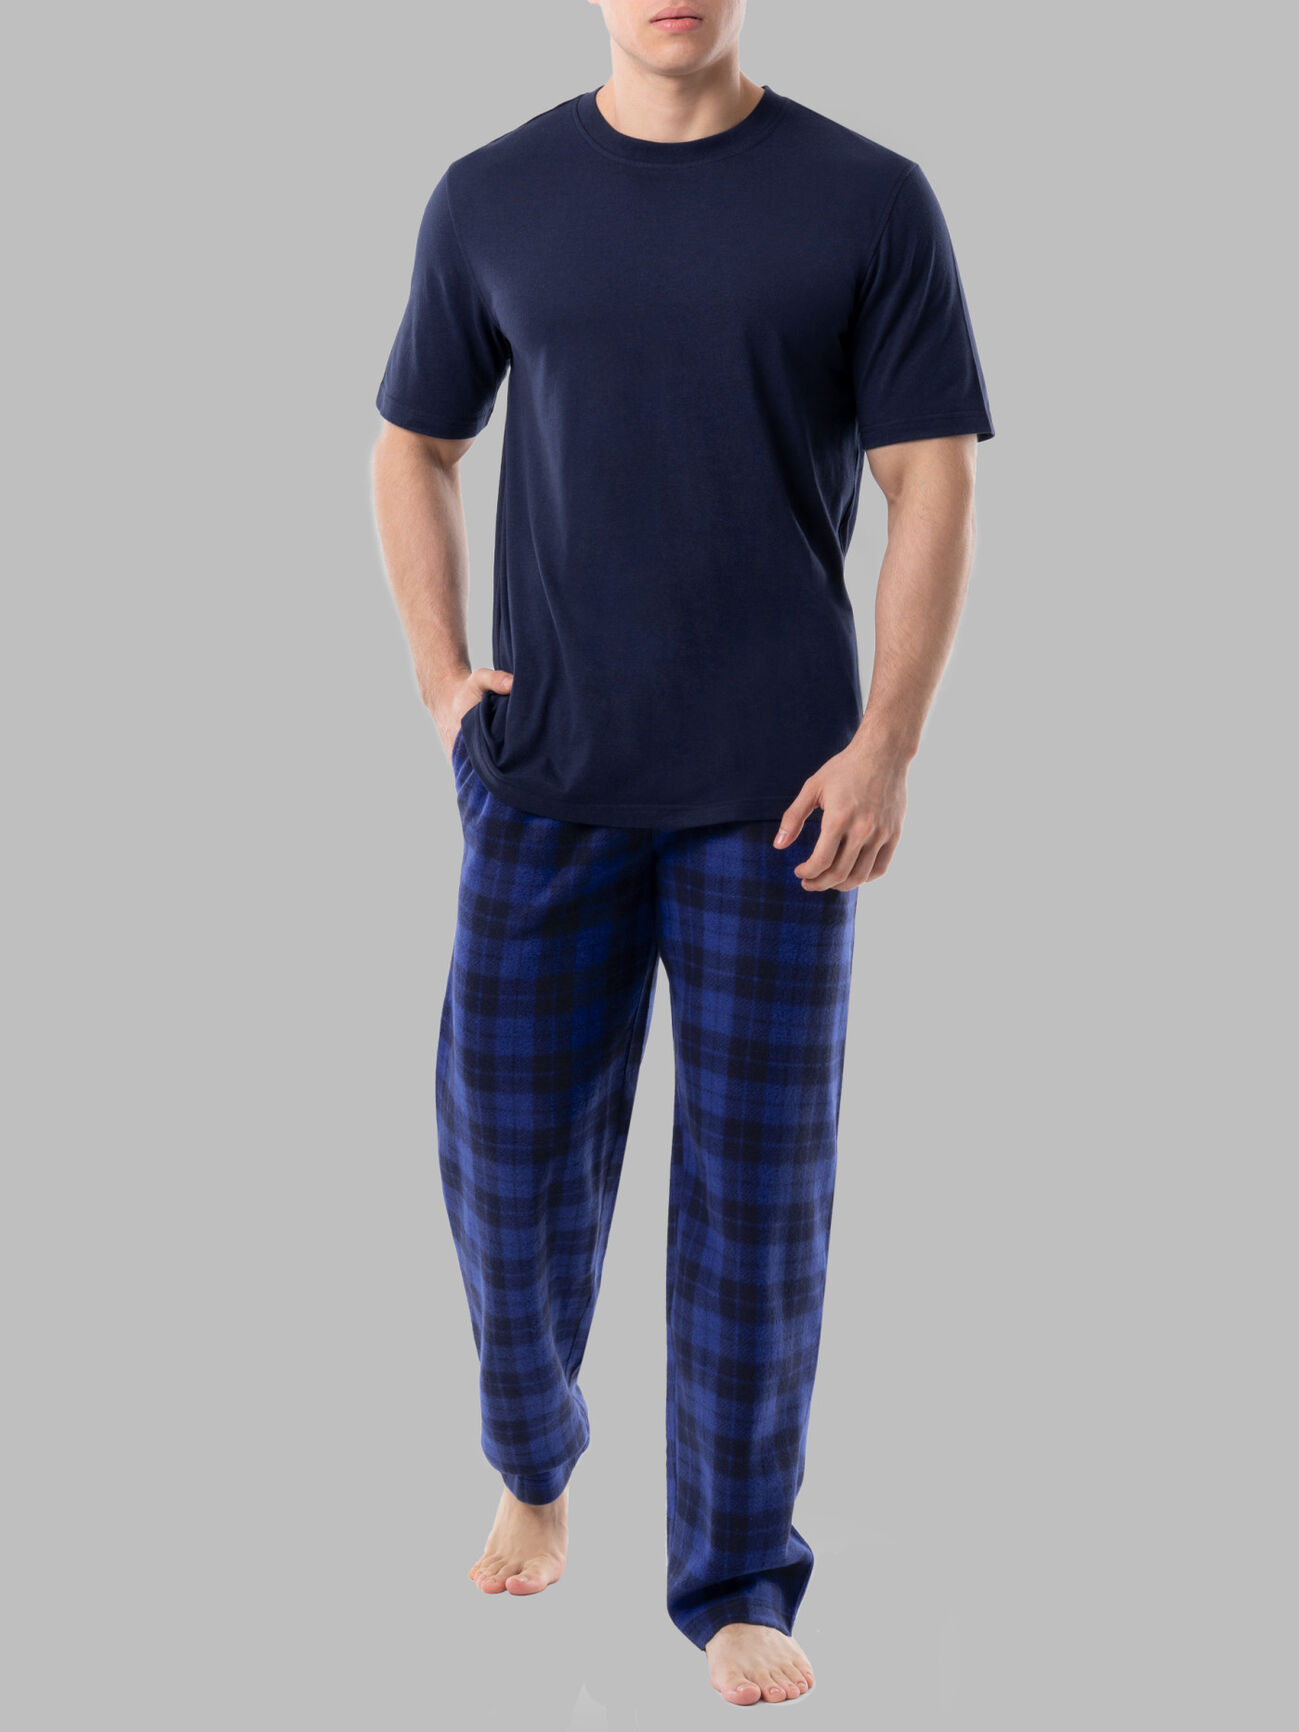 Women's 100% Cotton-Knit Pajama Pants (4-Pack) (Size XL)